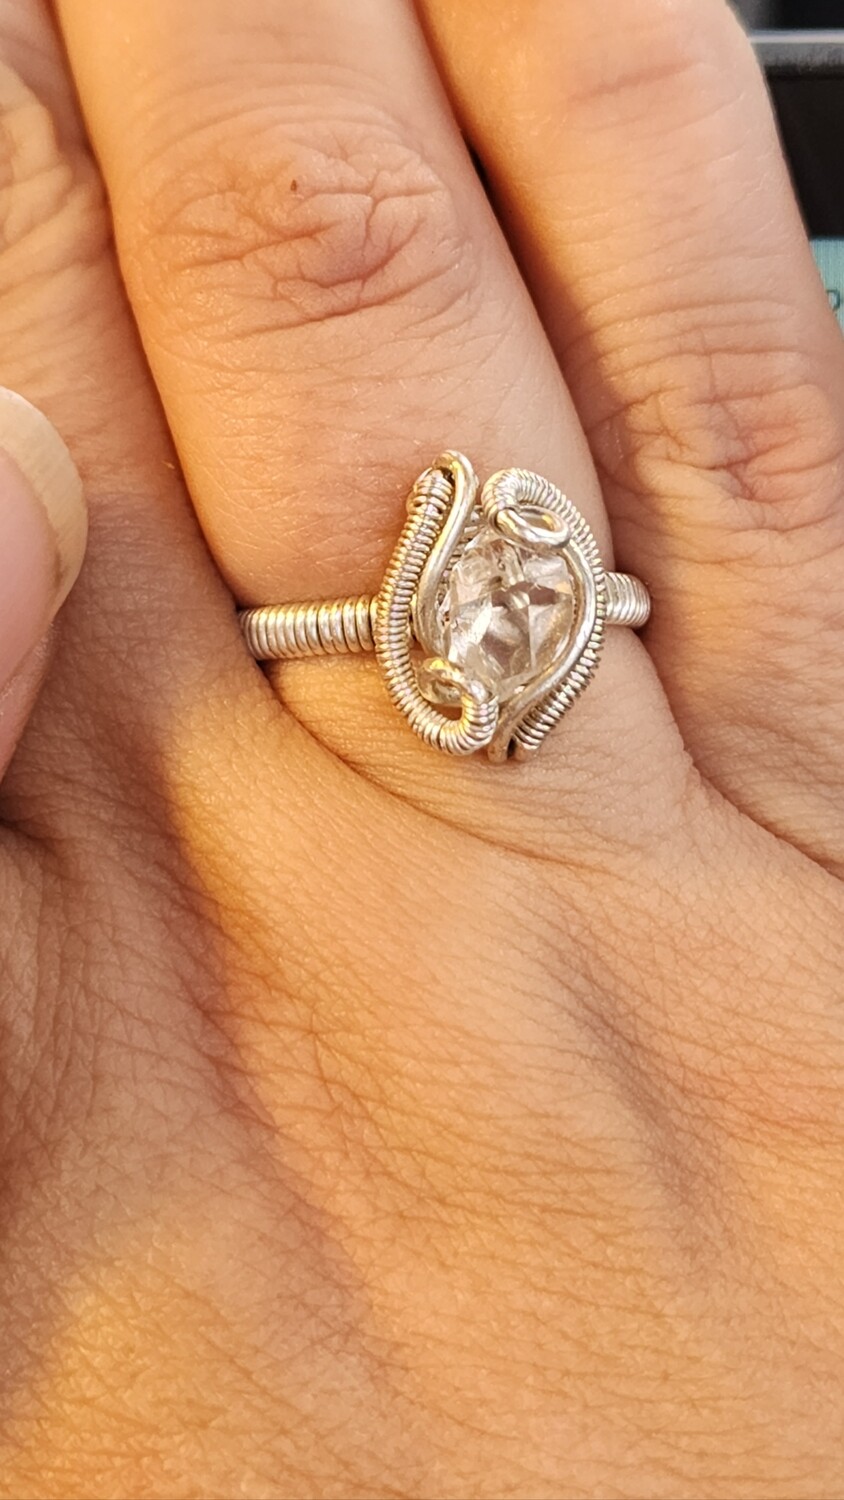 Herkimer diamond ring size 9